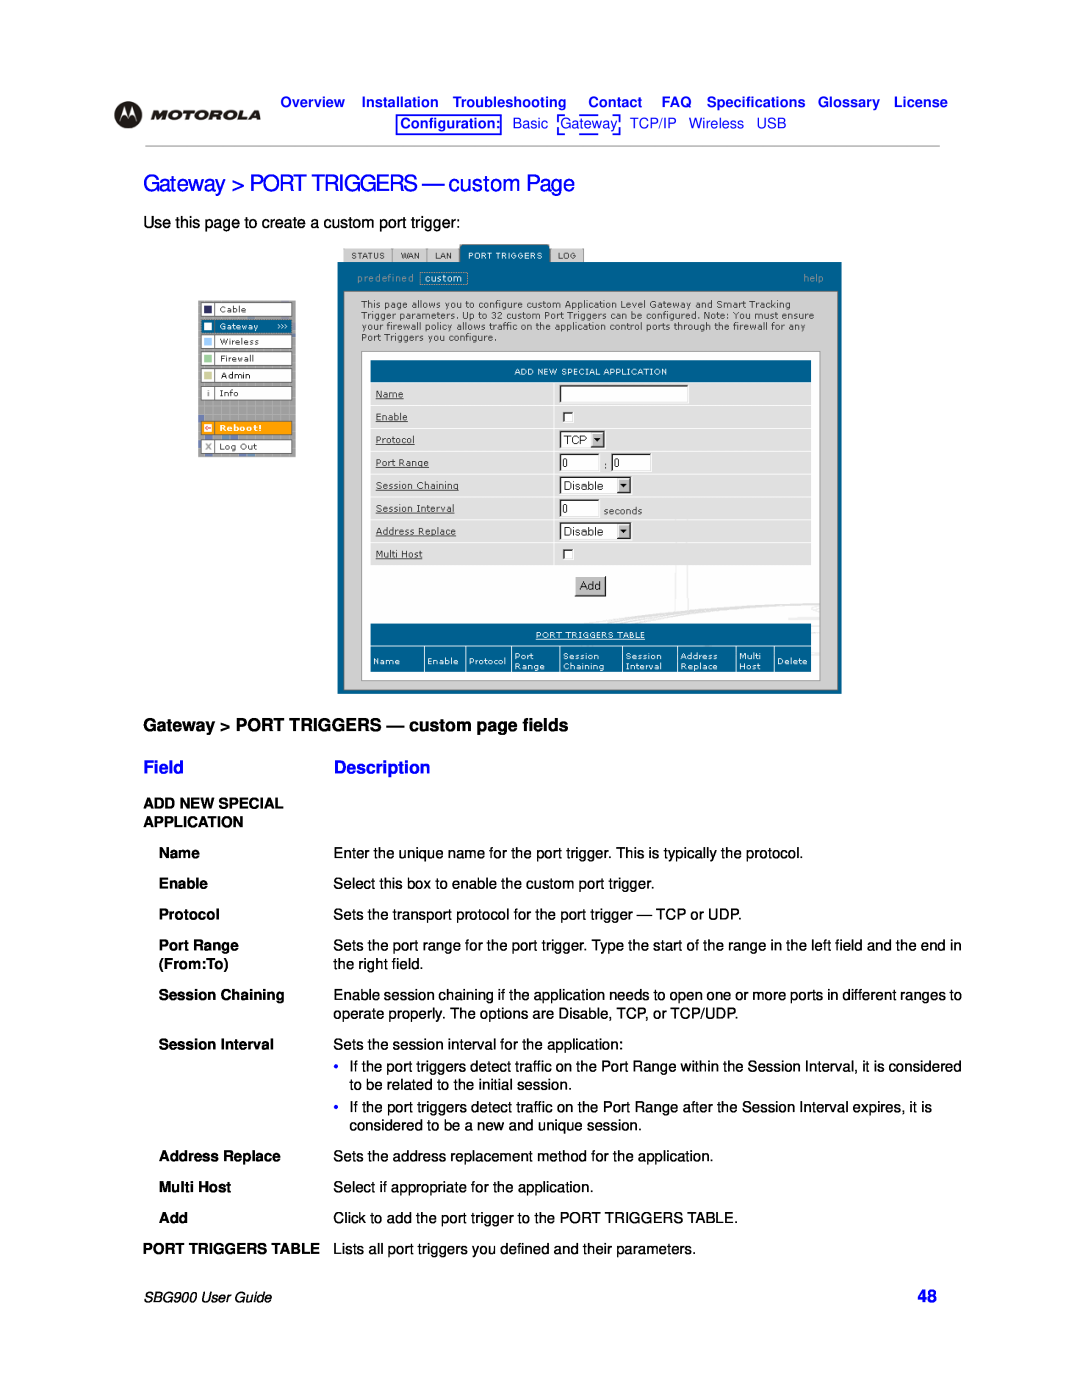 Motorola SBG900 manual Gateway PORT TRIGGERS - custom Page, Gateway PORT TRIGGERS - custom page fields, Field, Description 